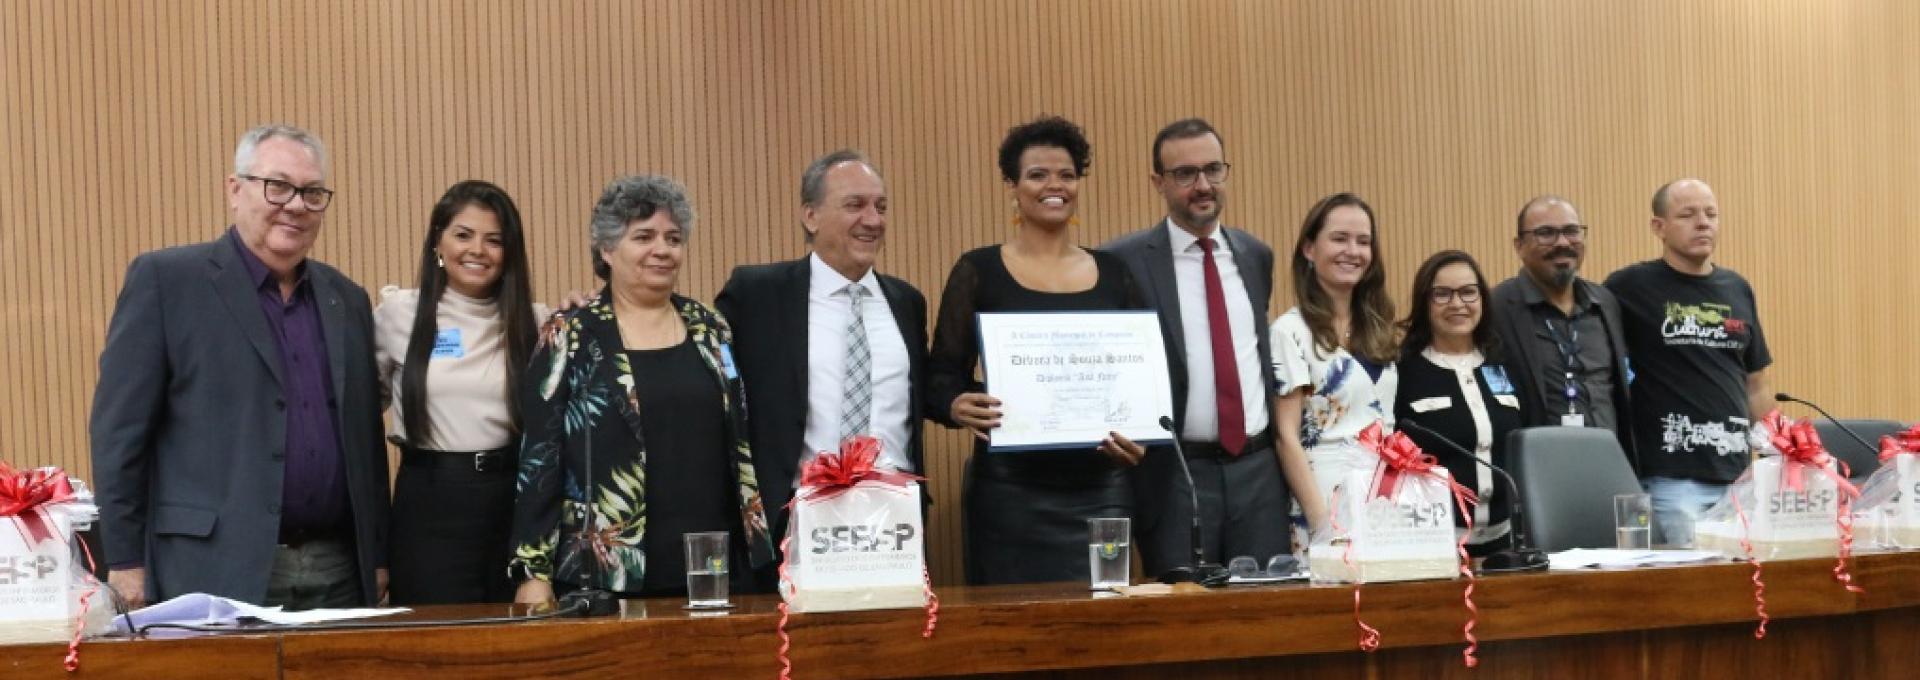 Docente da FEnf recebe Diploma "Ana Nery"